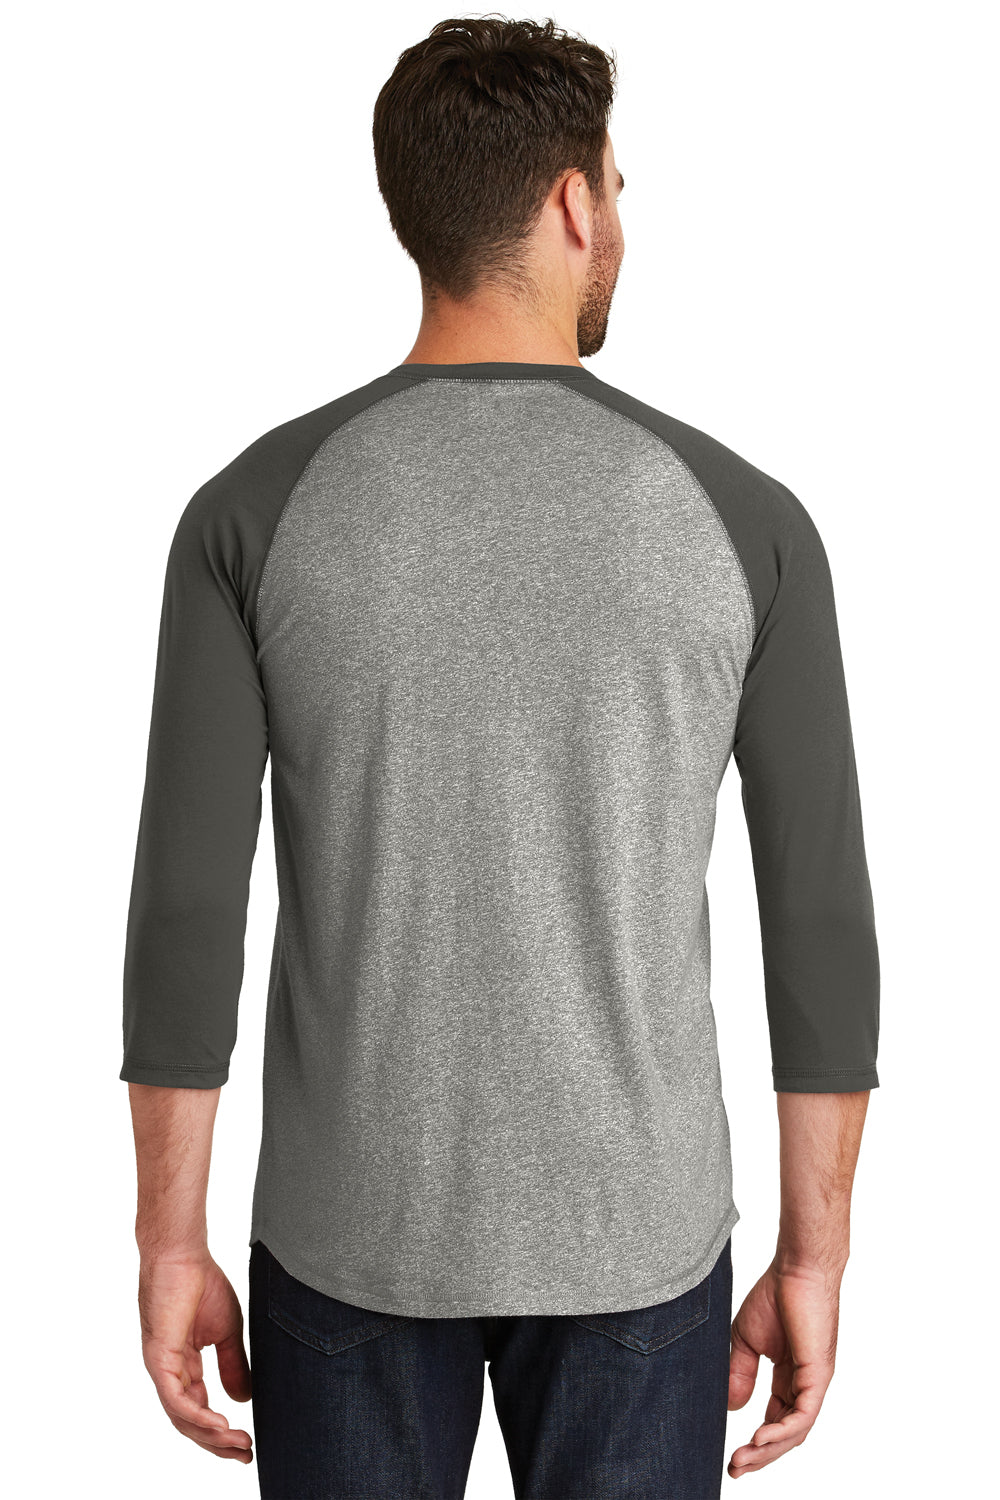 New Era NEA104 Mens Heritage 3/4 Sleeve Crewneck T-Shirt Graphite Grey/Light Graphite Grey Twist Back